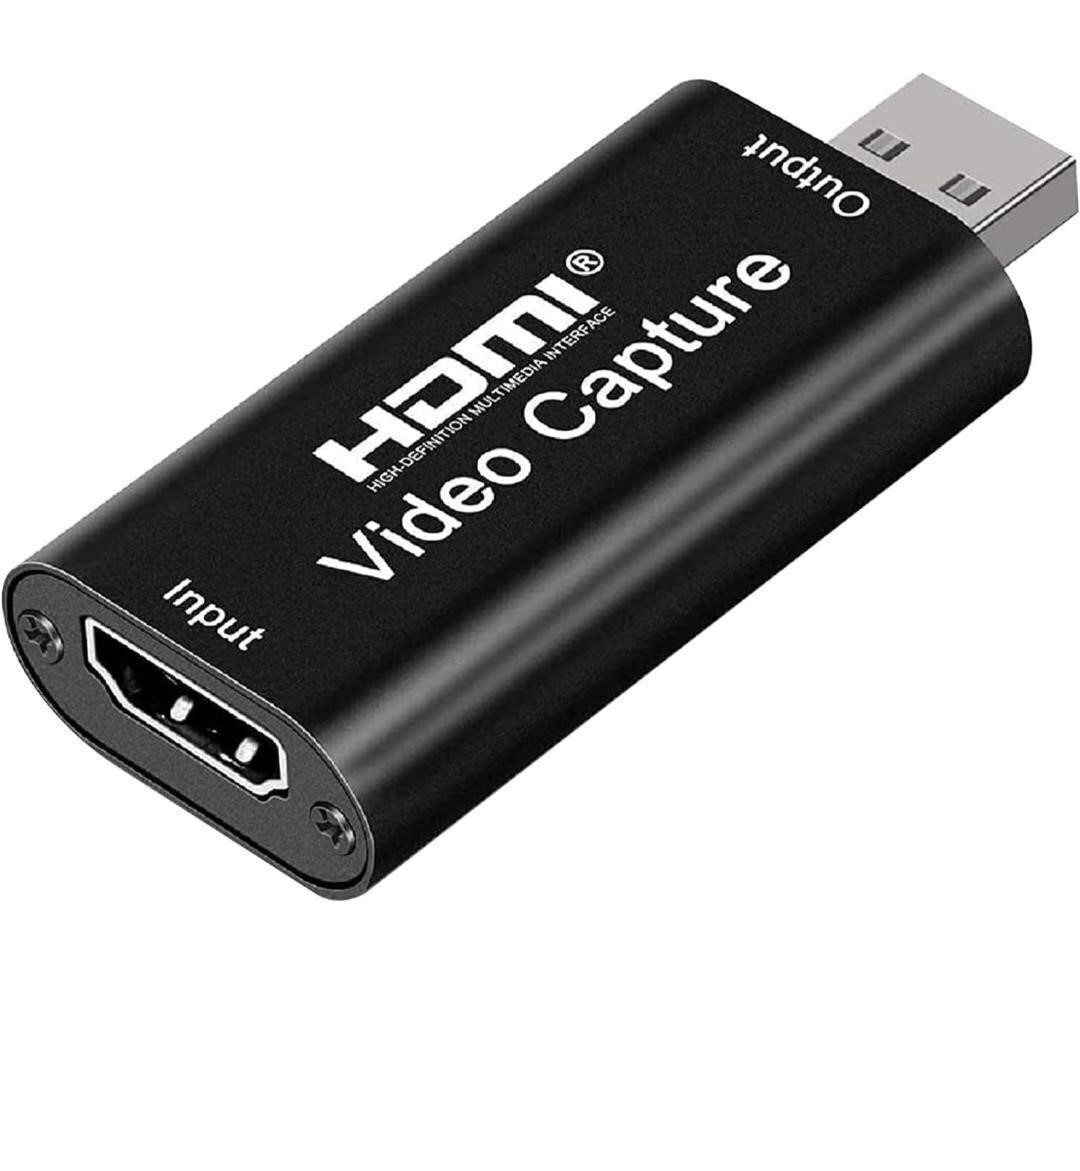 $19-AUDIO VIDEO CAPTURE CARDS 1080P VIDEO CARD USB